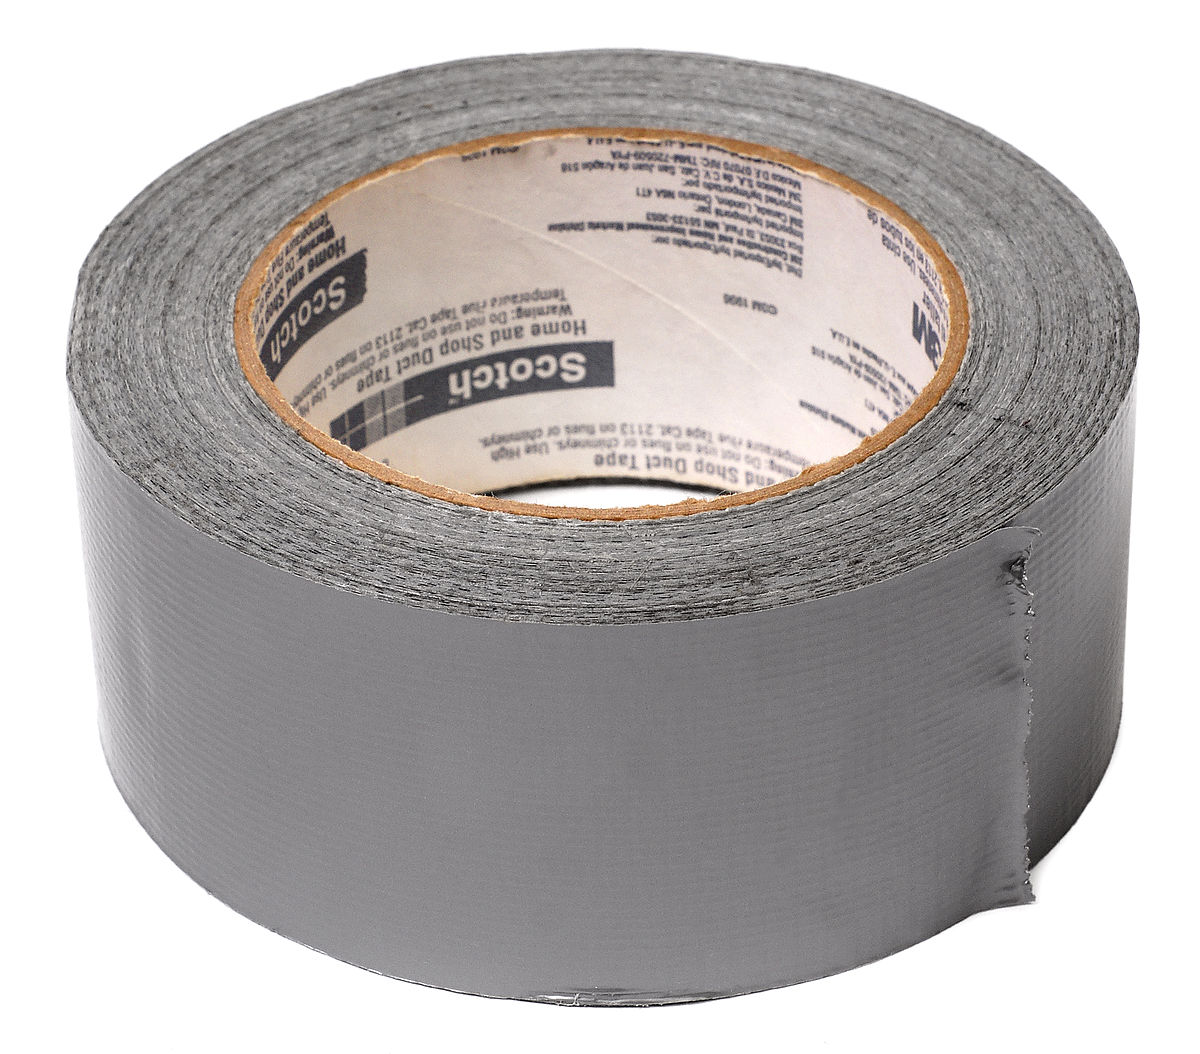 Duct tape - Wikipedia